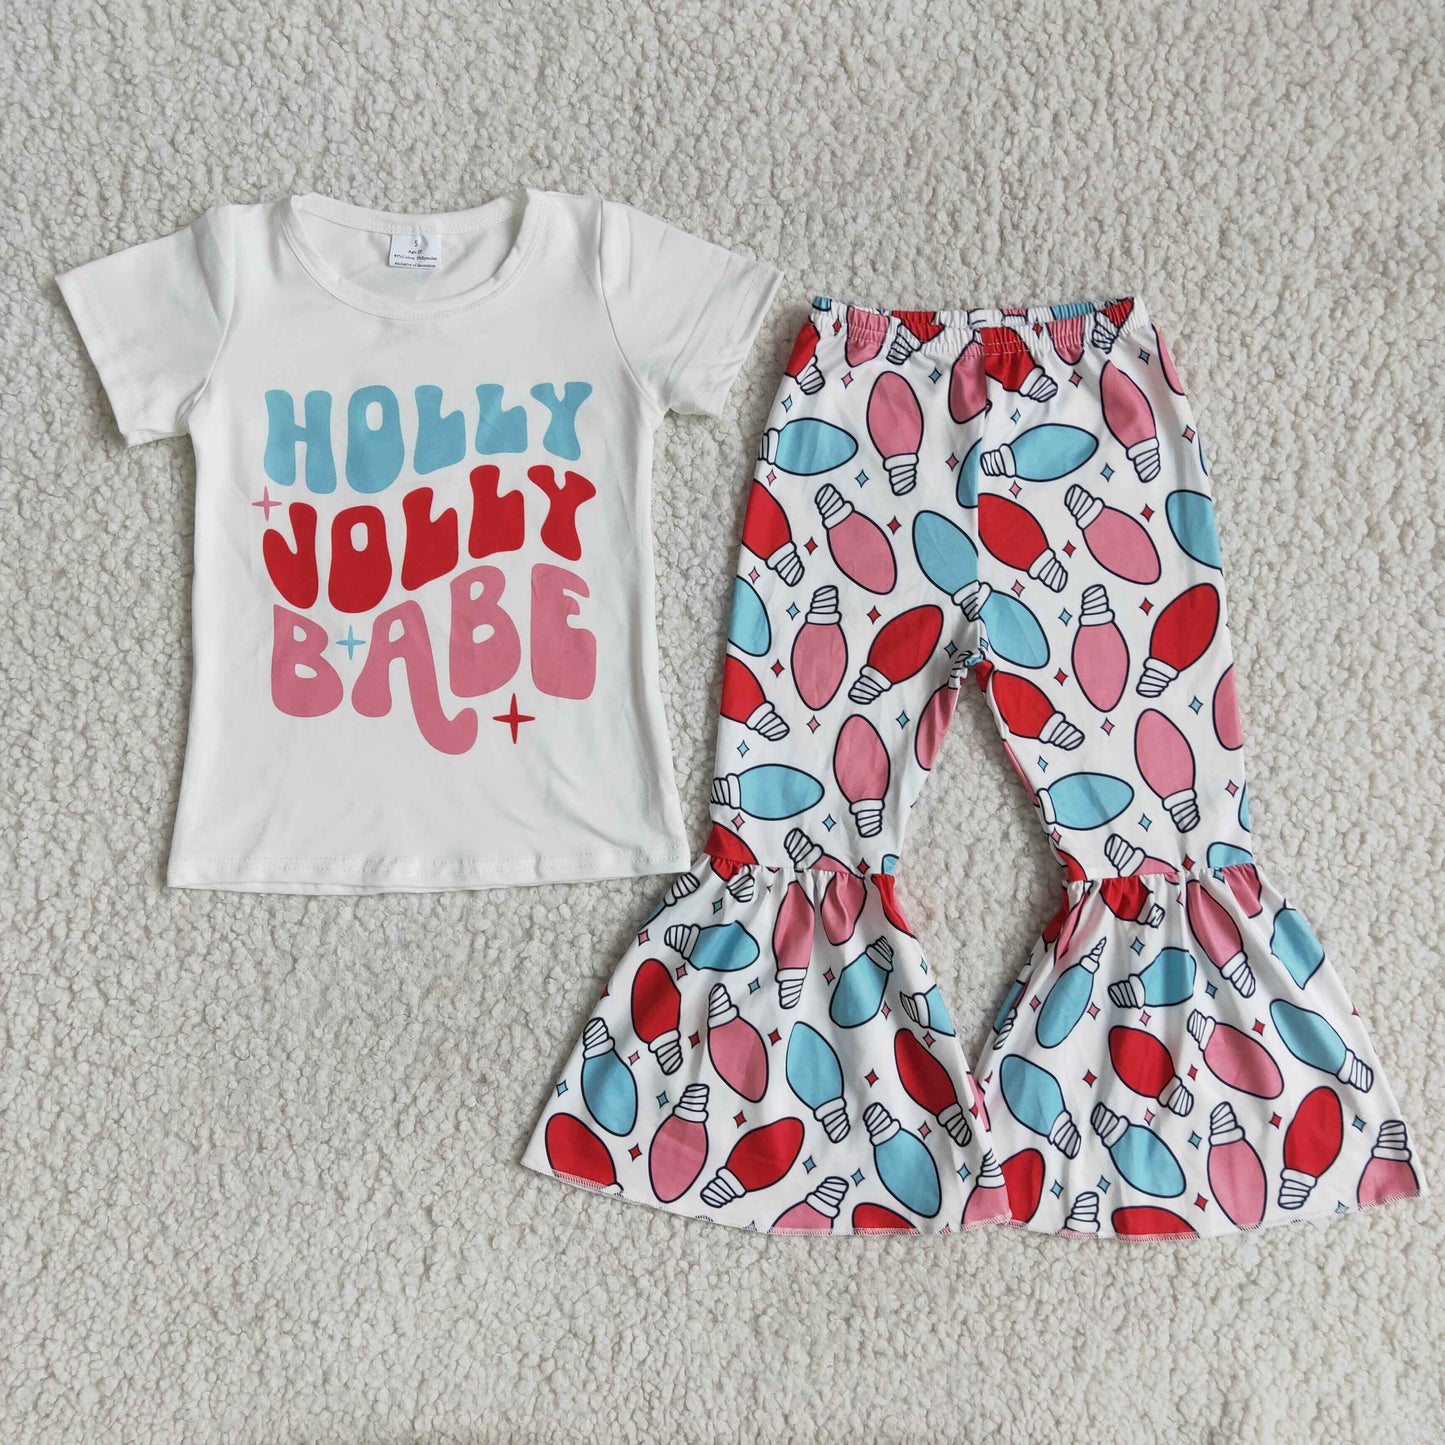 Holly jolly babe 2pcs clothing set